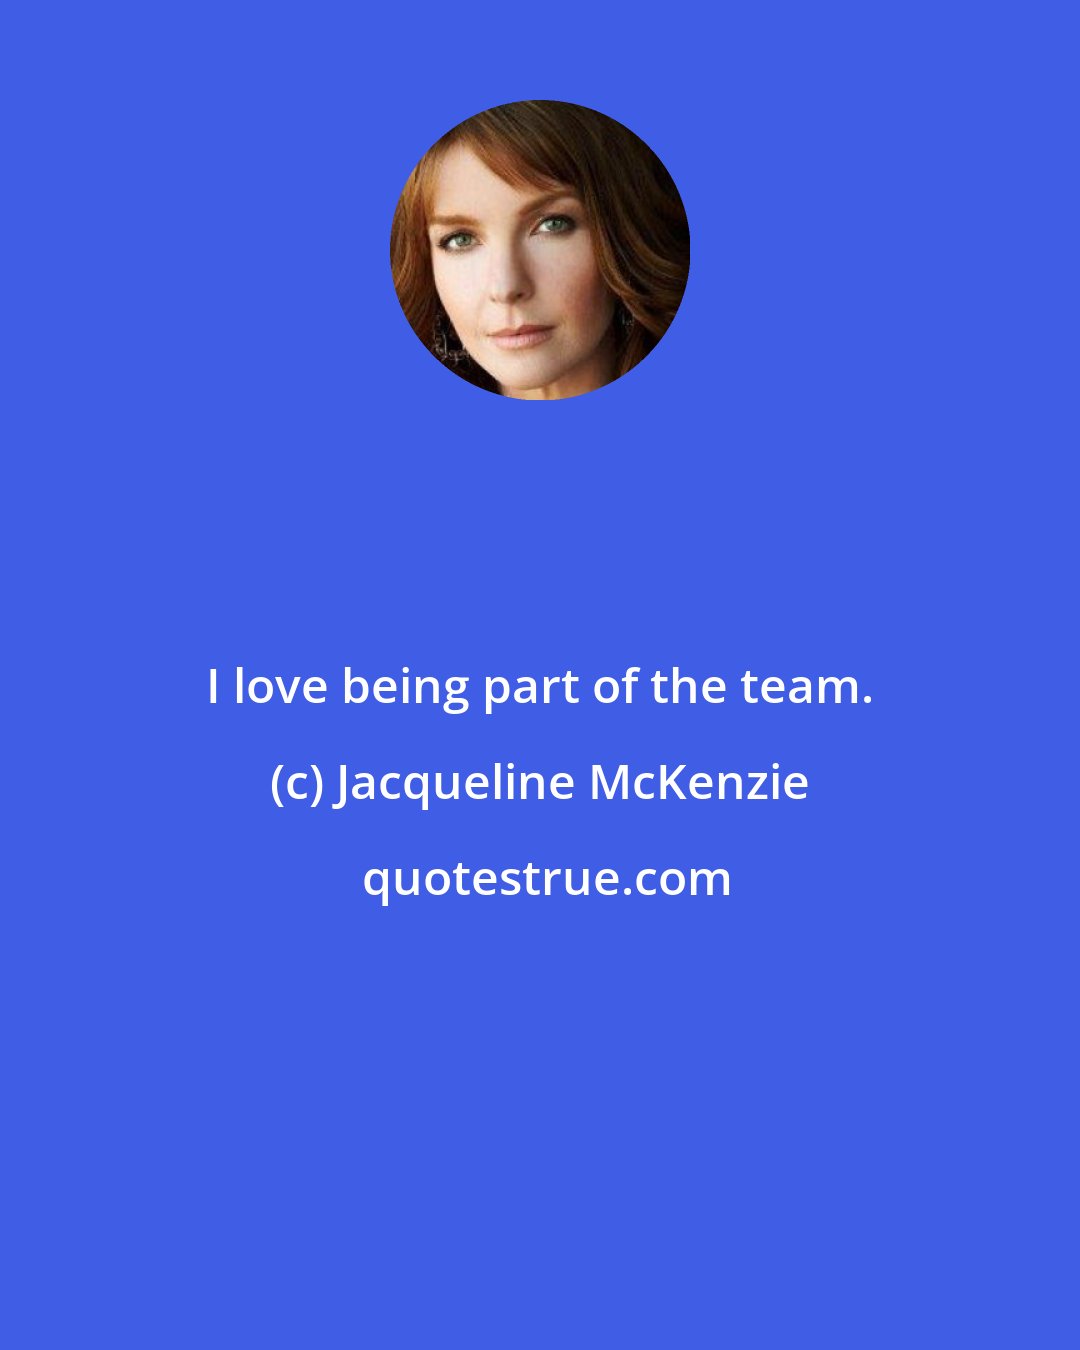 Jacqueline McKenzie: I love being part of the team.